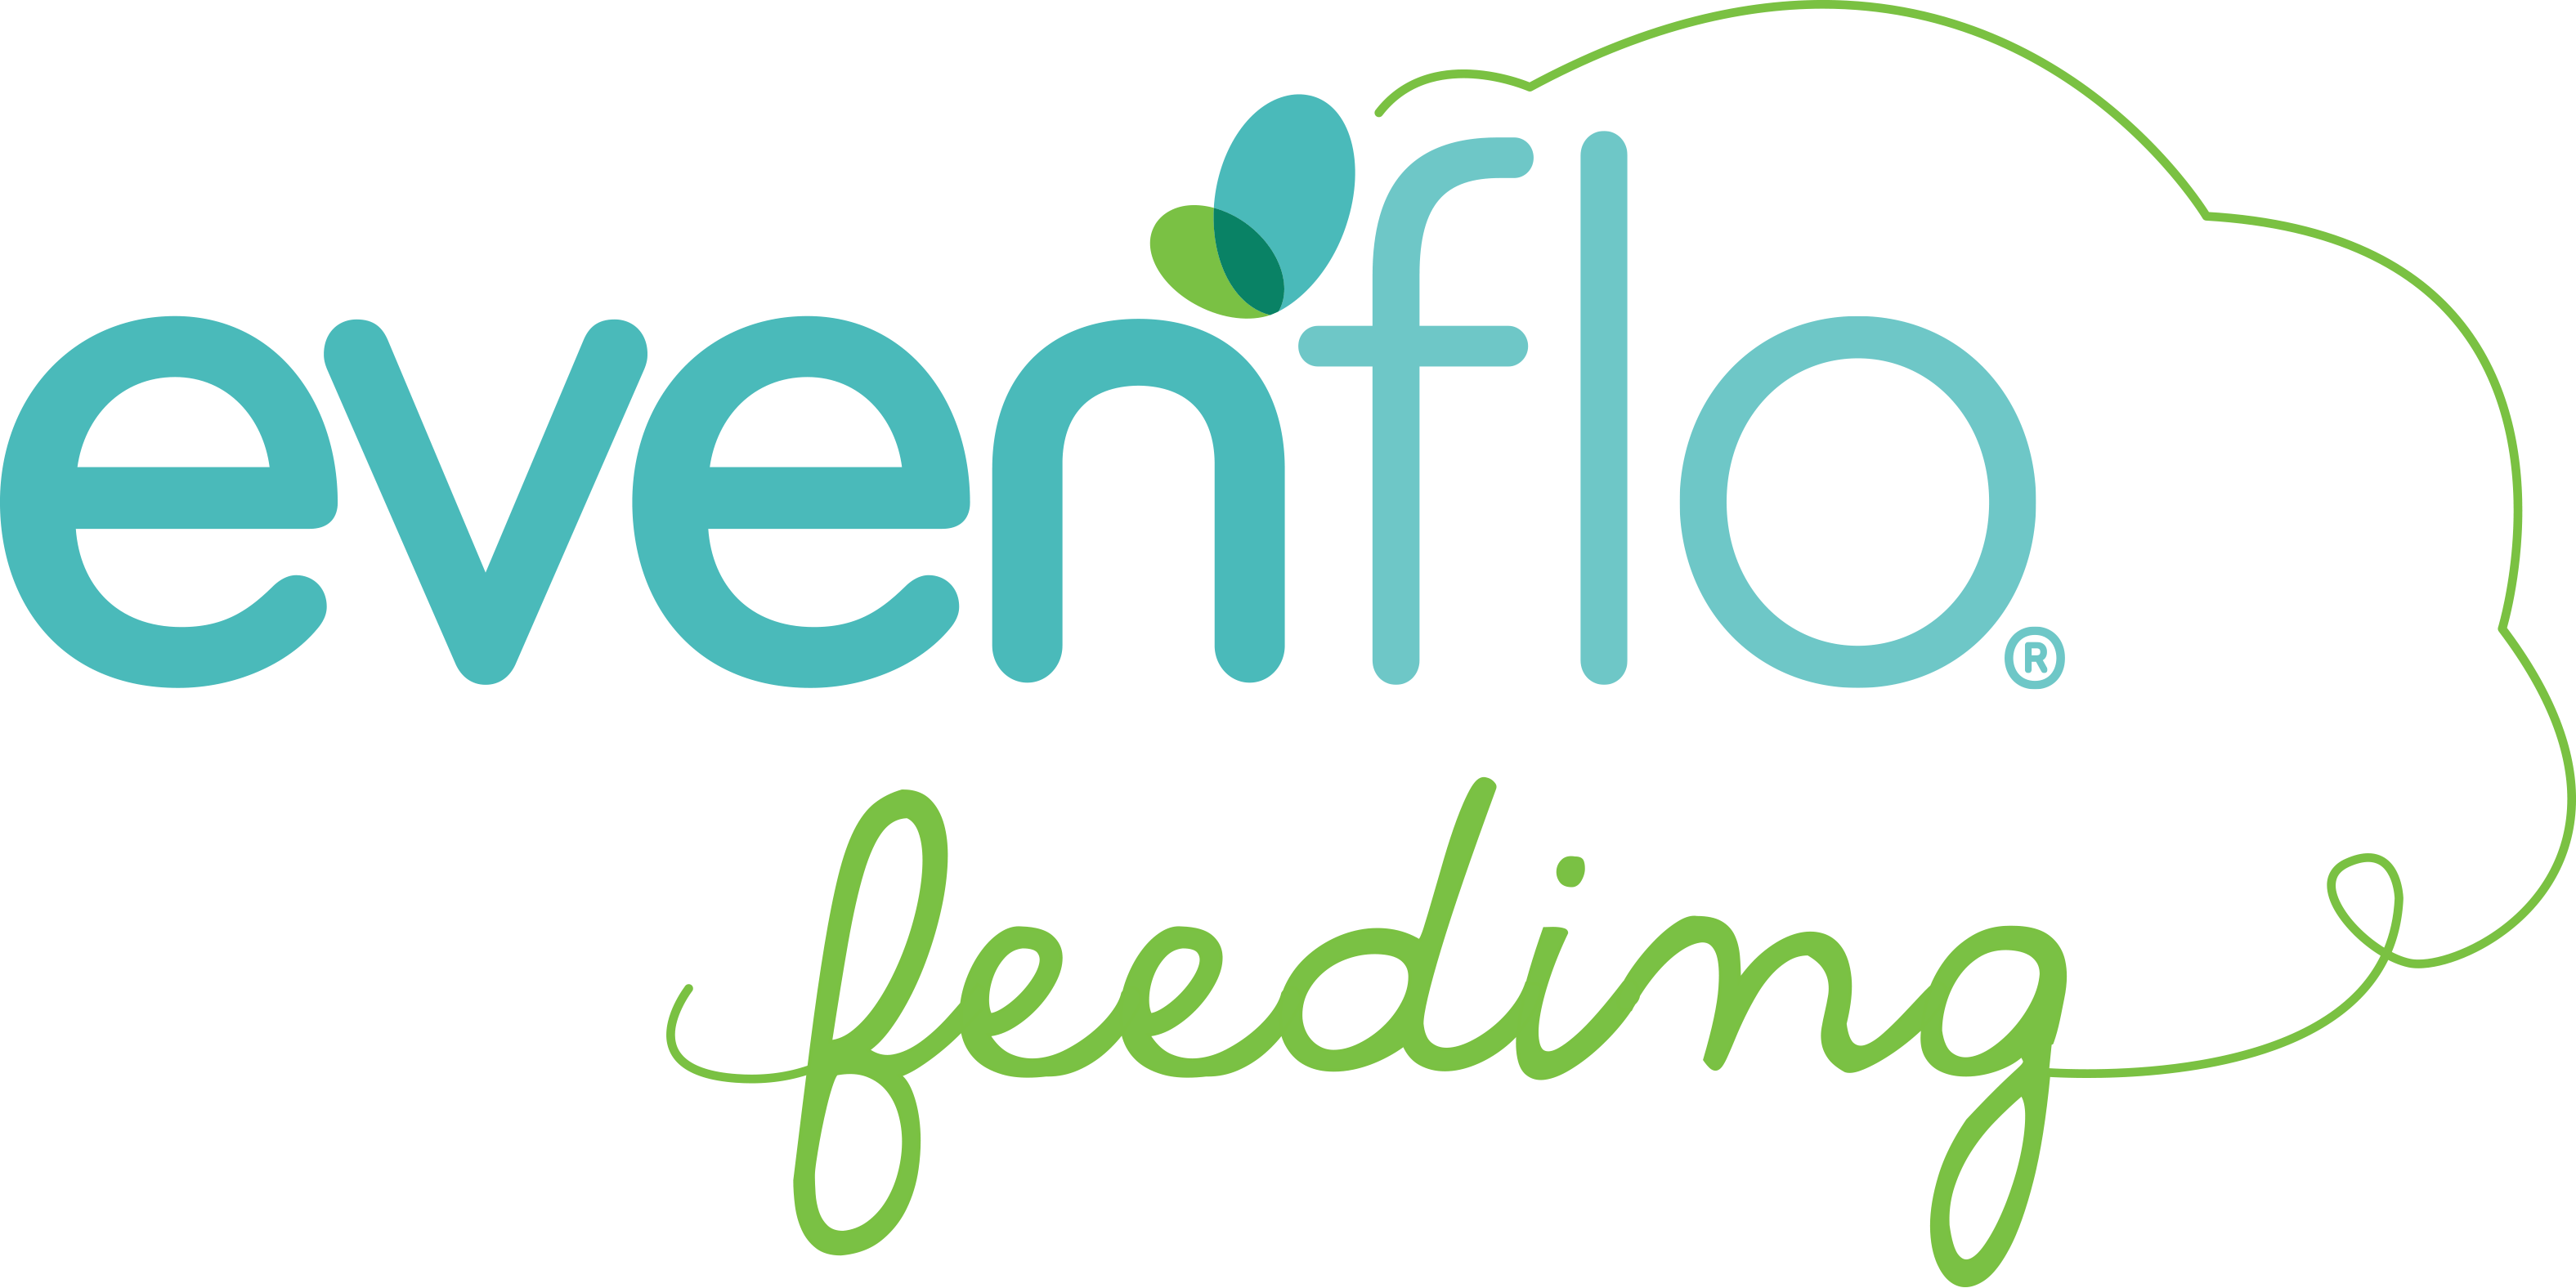 Evenflo Logo - Evenflo Feeding Logo